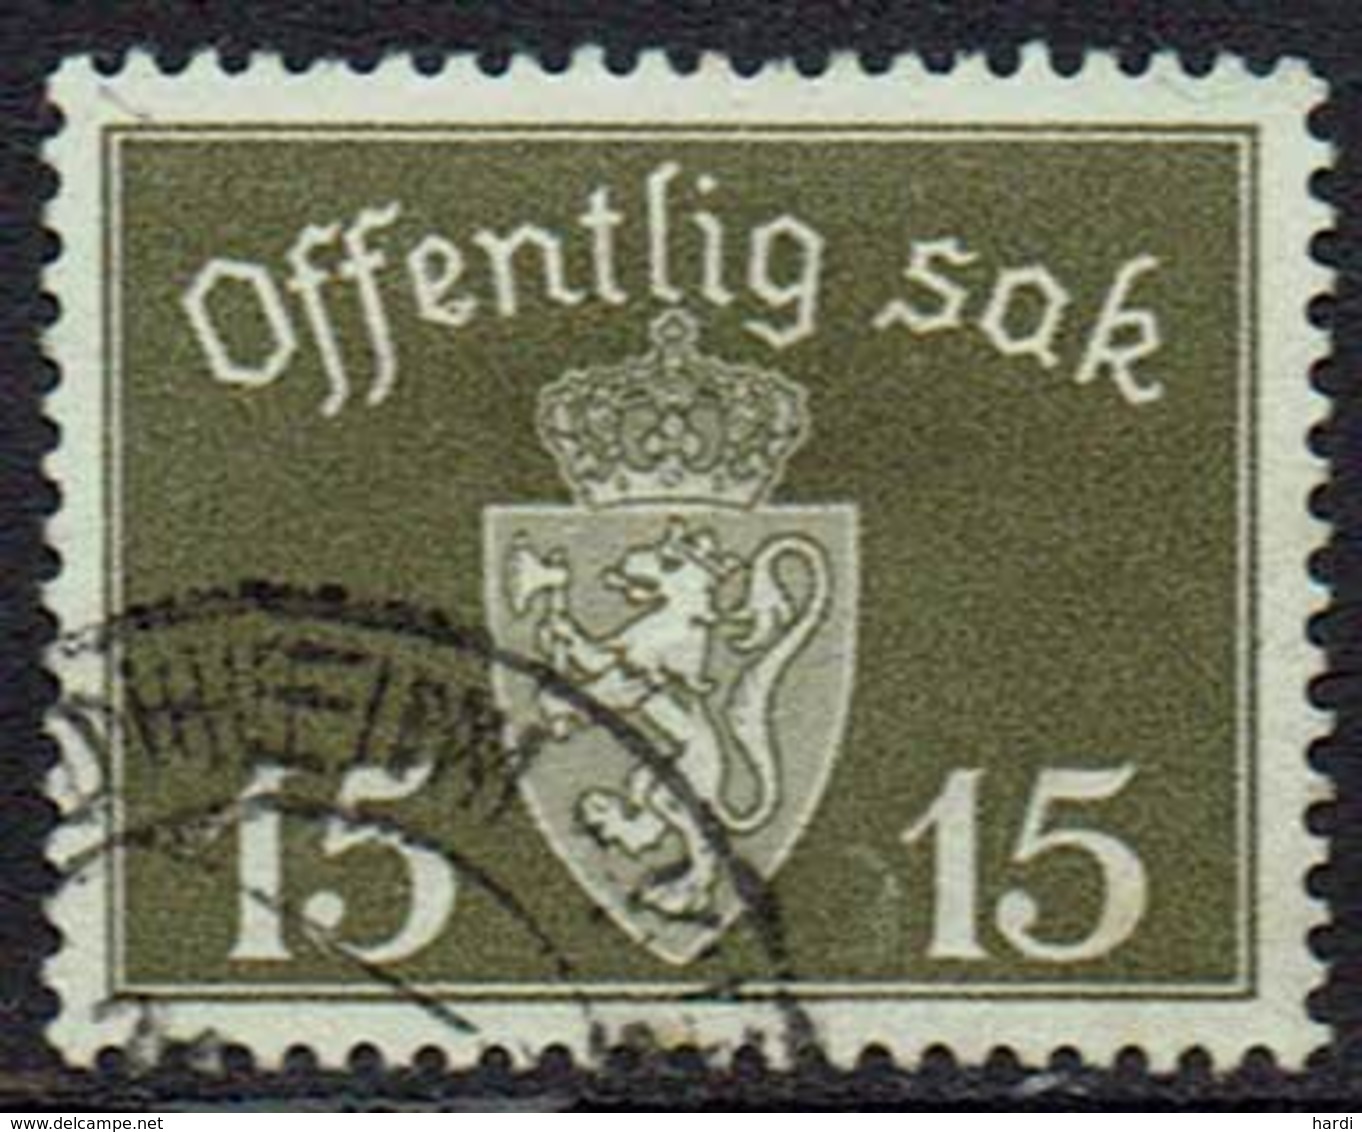 Norwegen DM, 1939, MiNr 36, Gestempelt - Oficiales